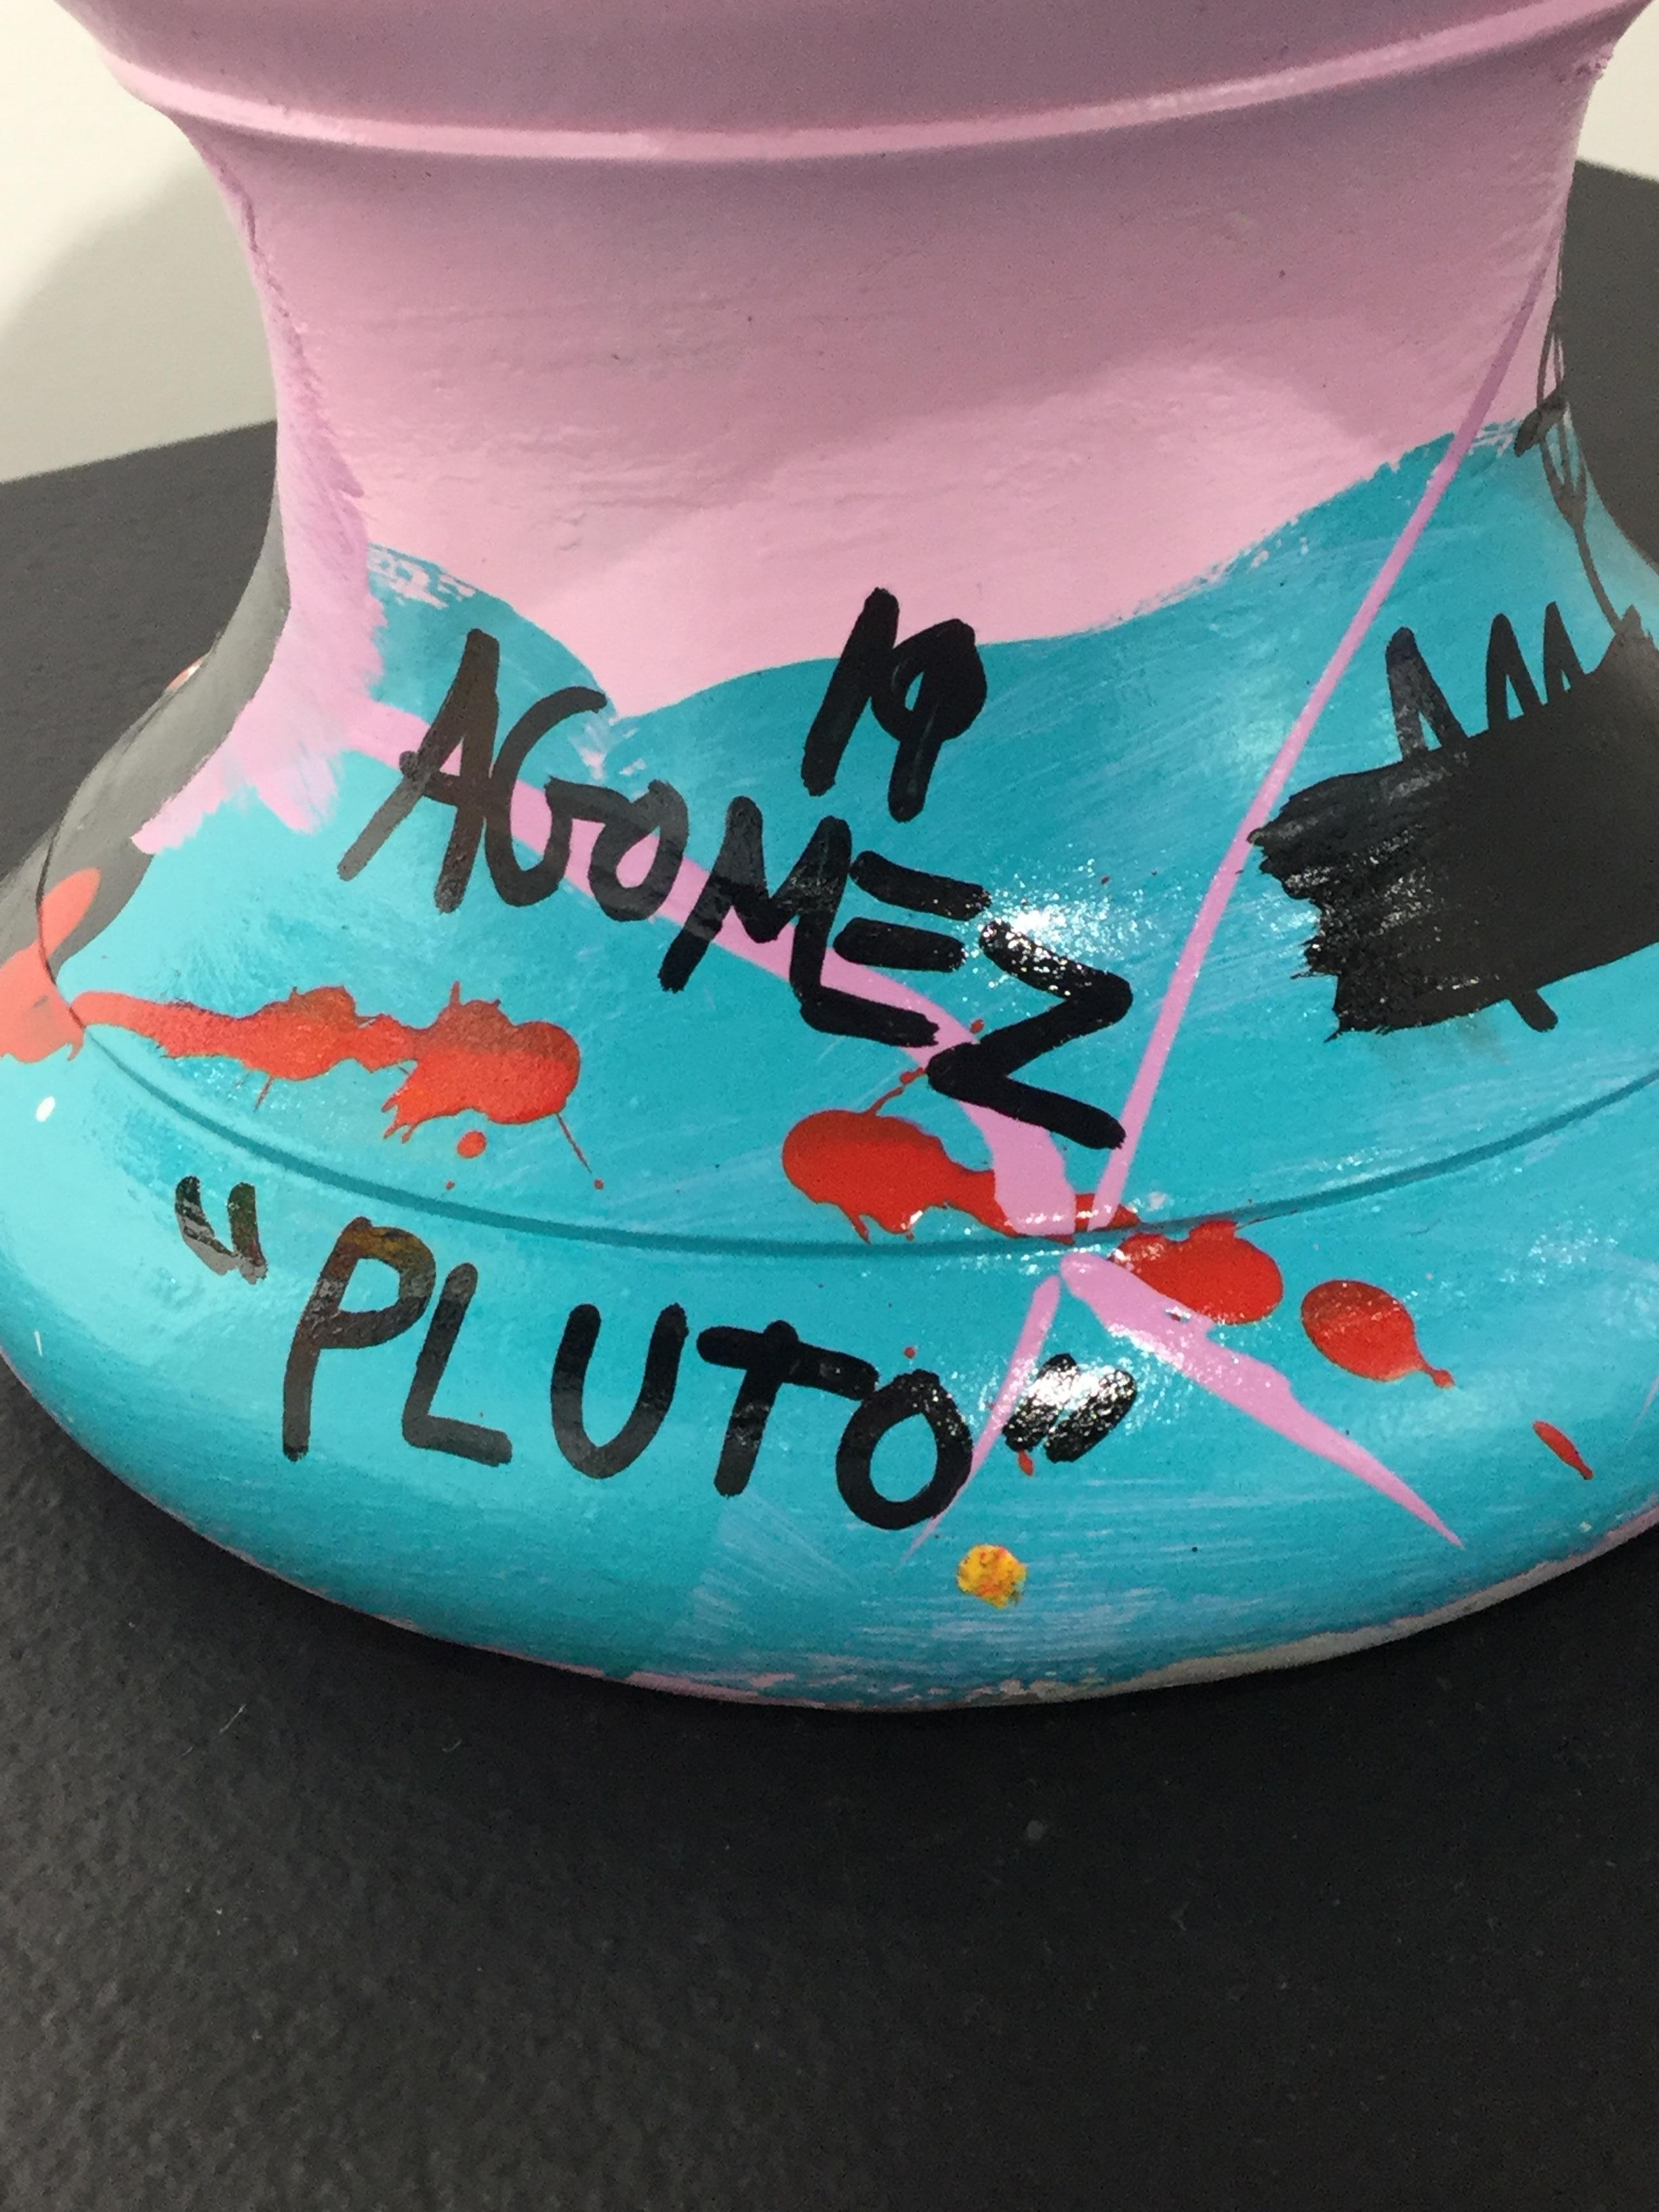 A. Gomez, Pluto 2